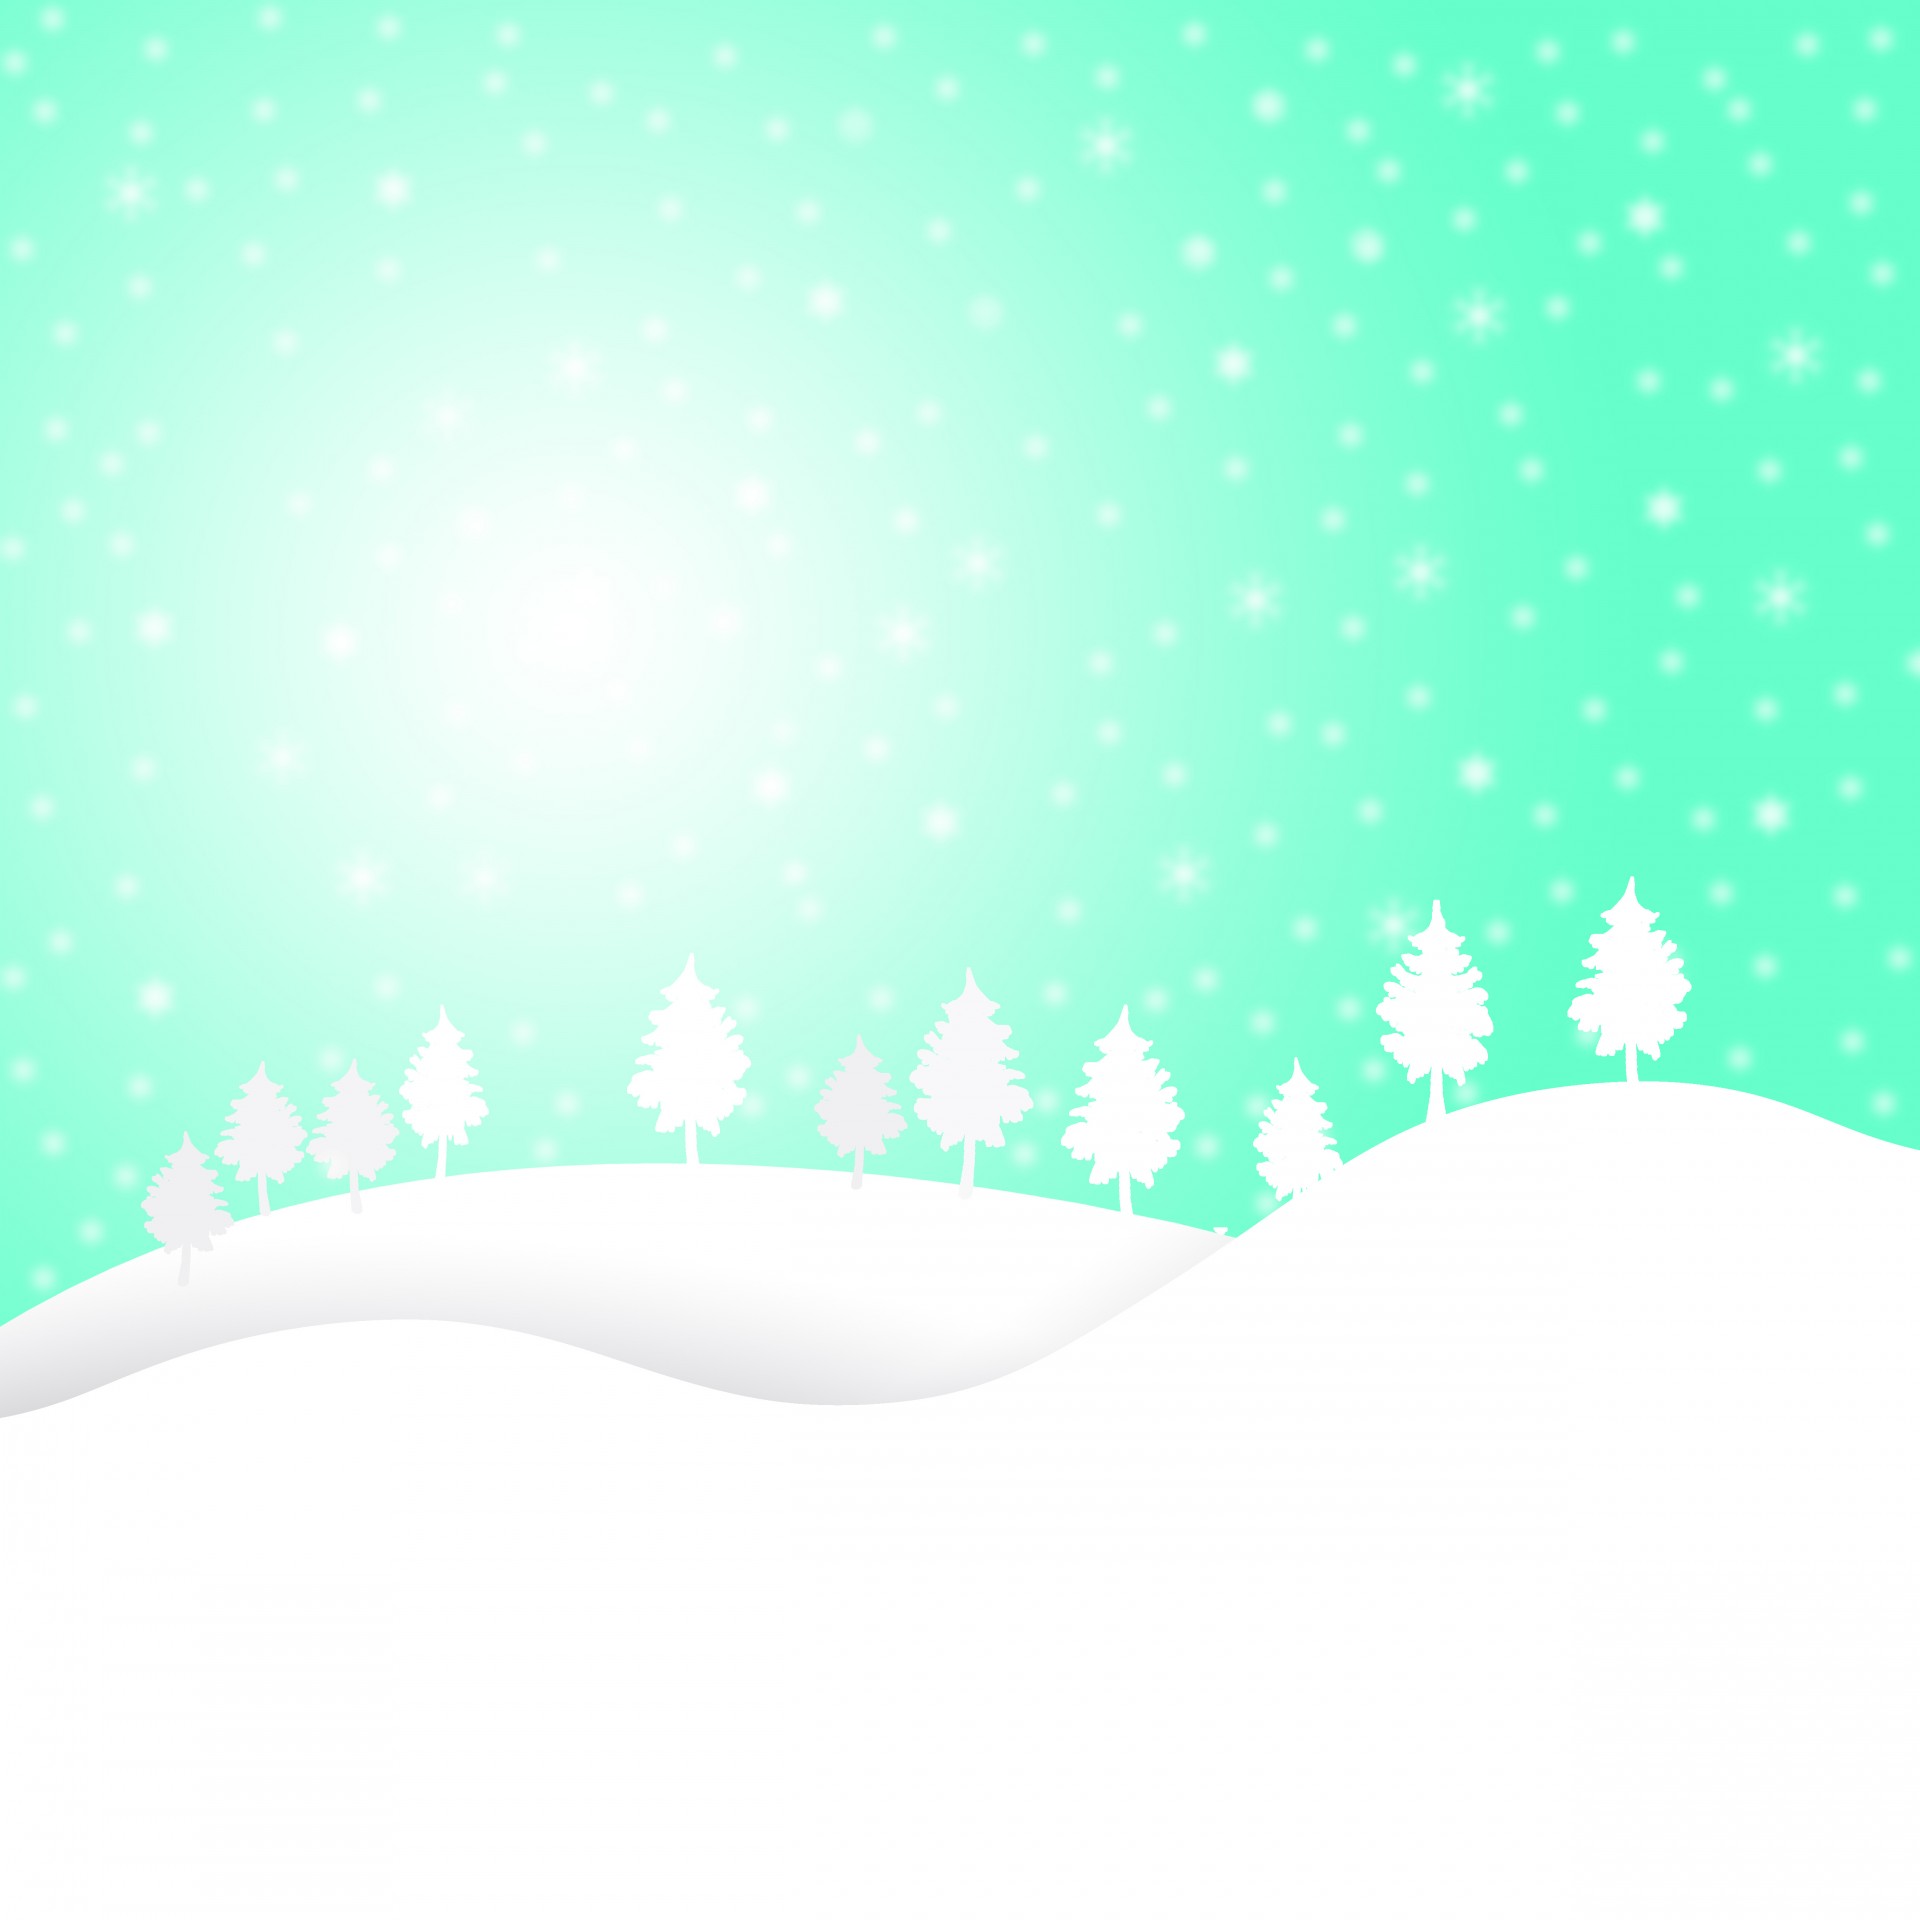 Illustration of christmas snow with trees on horizon